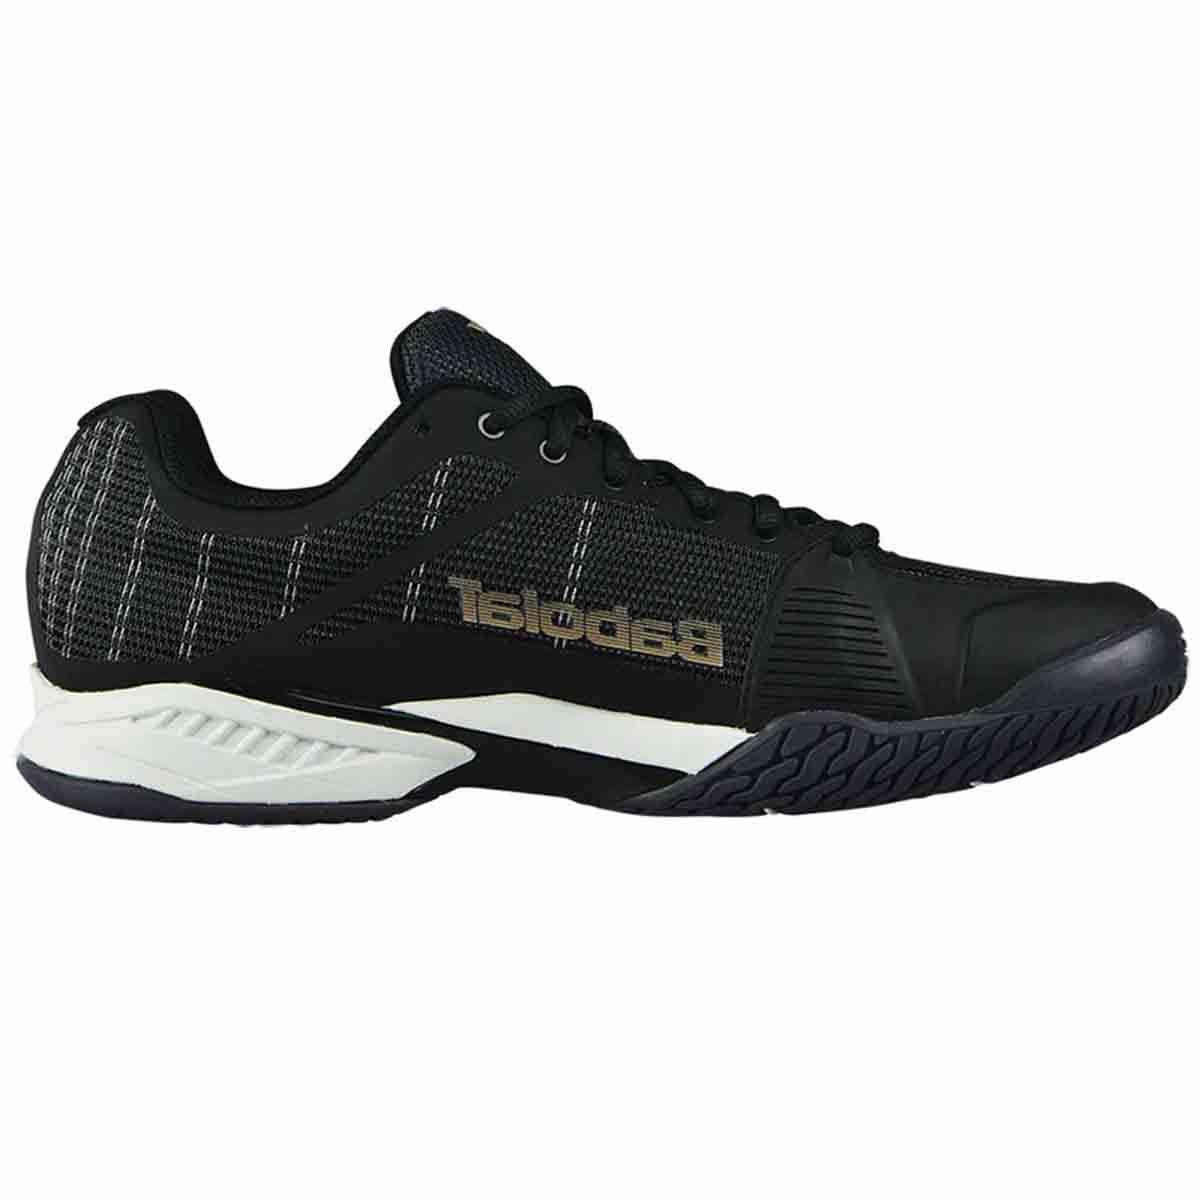 Buy Babolat Jet Mach I All Court Tennis Shoes (Black/Champion) Online